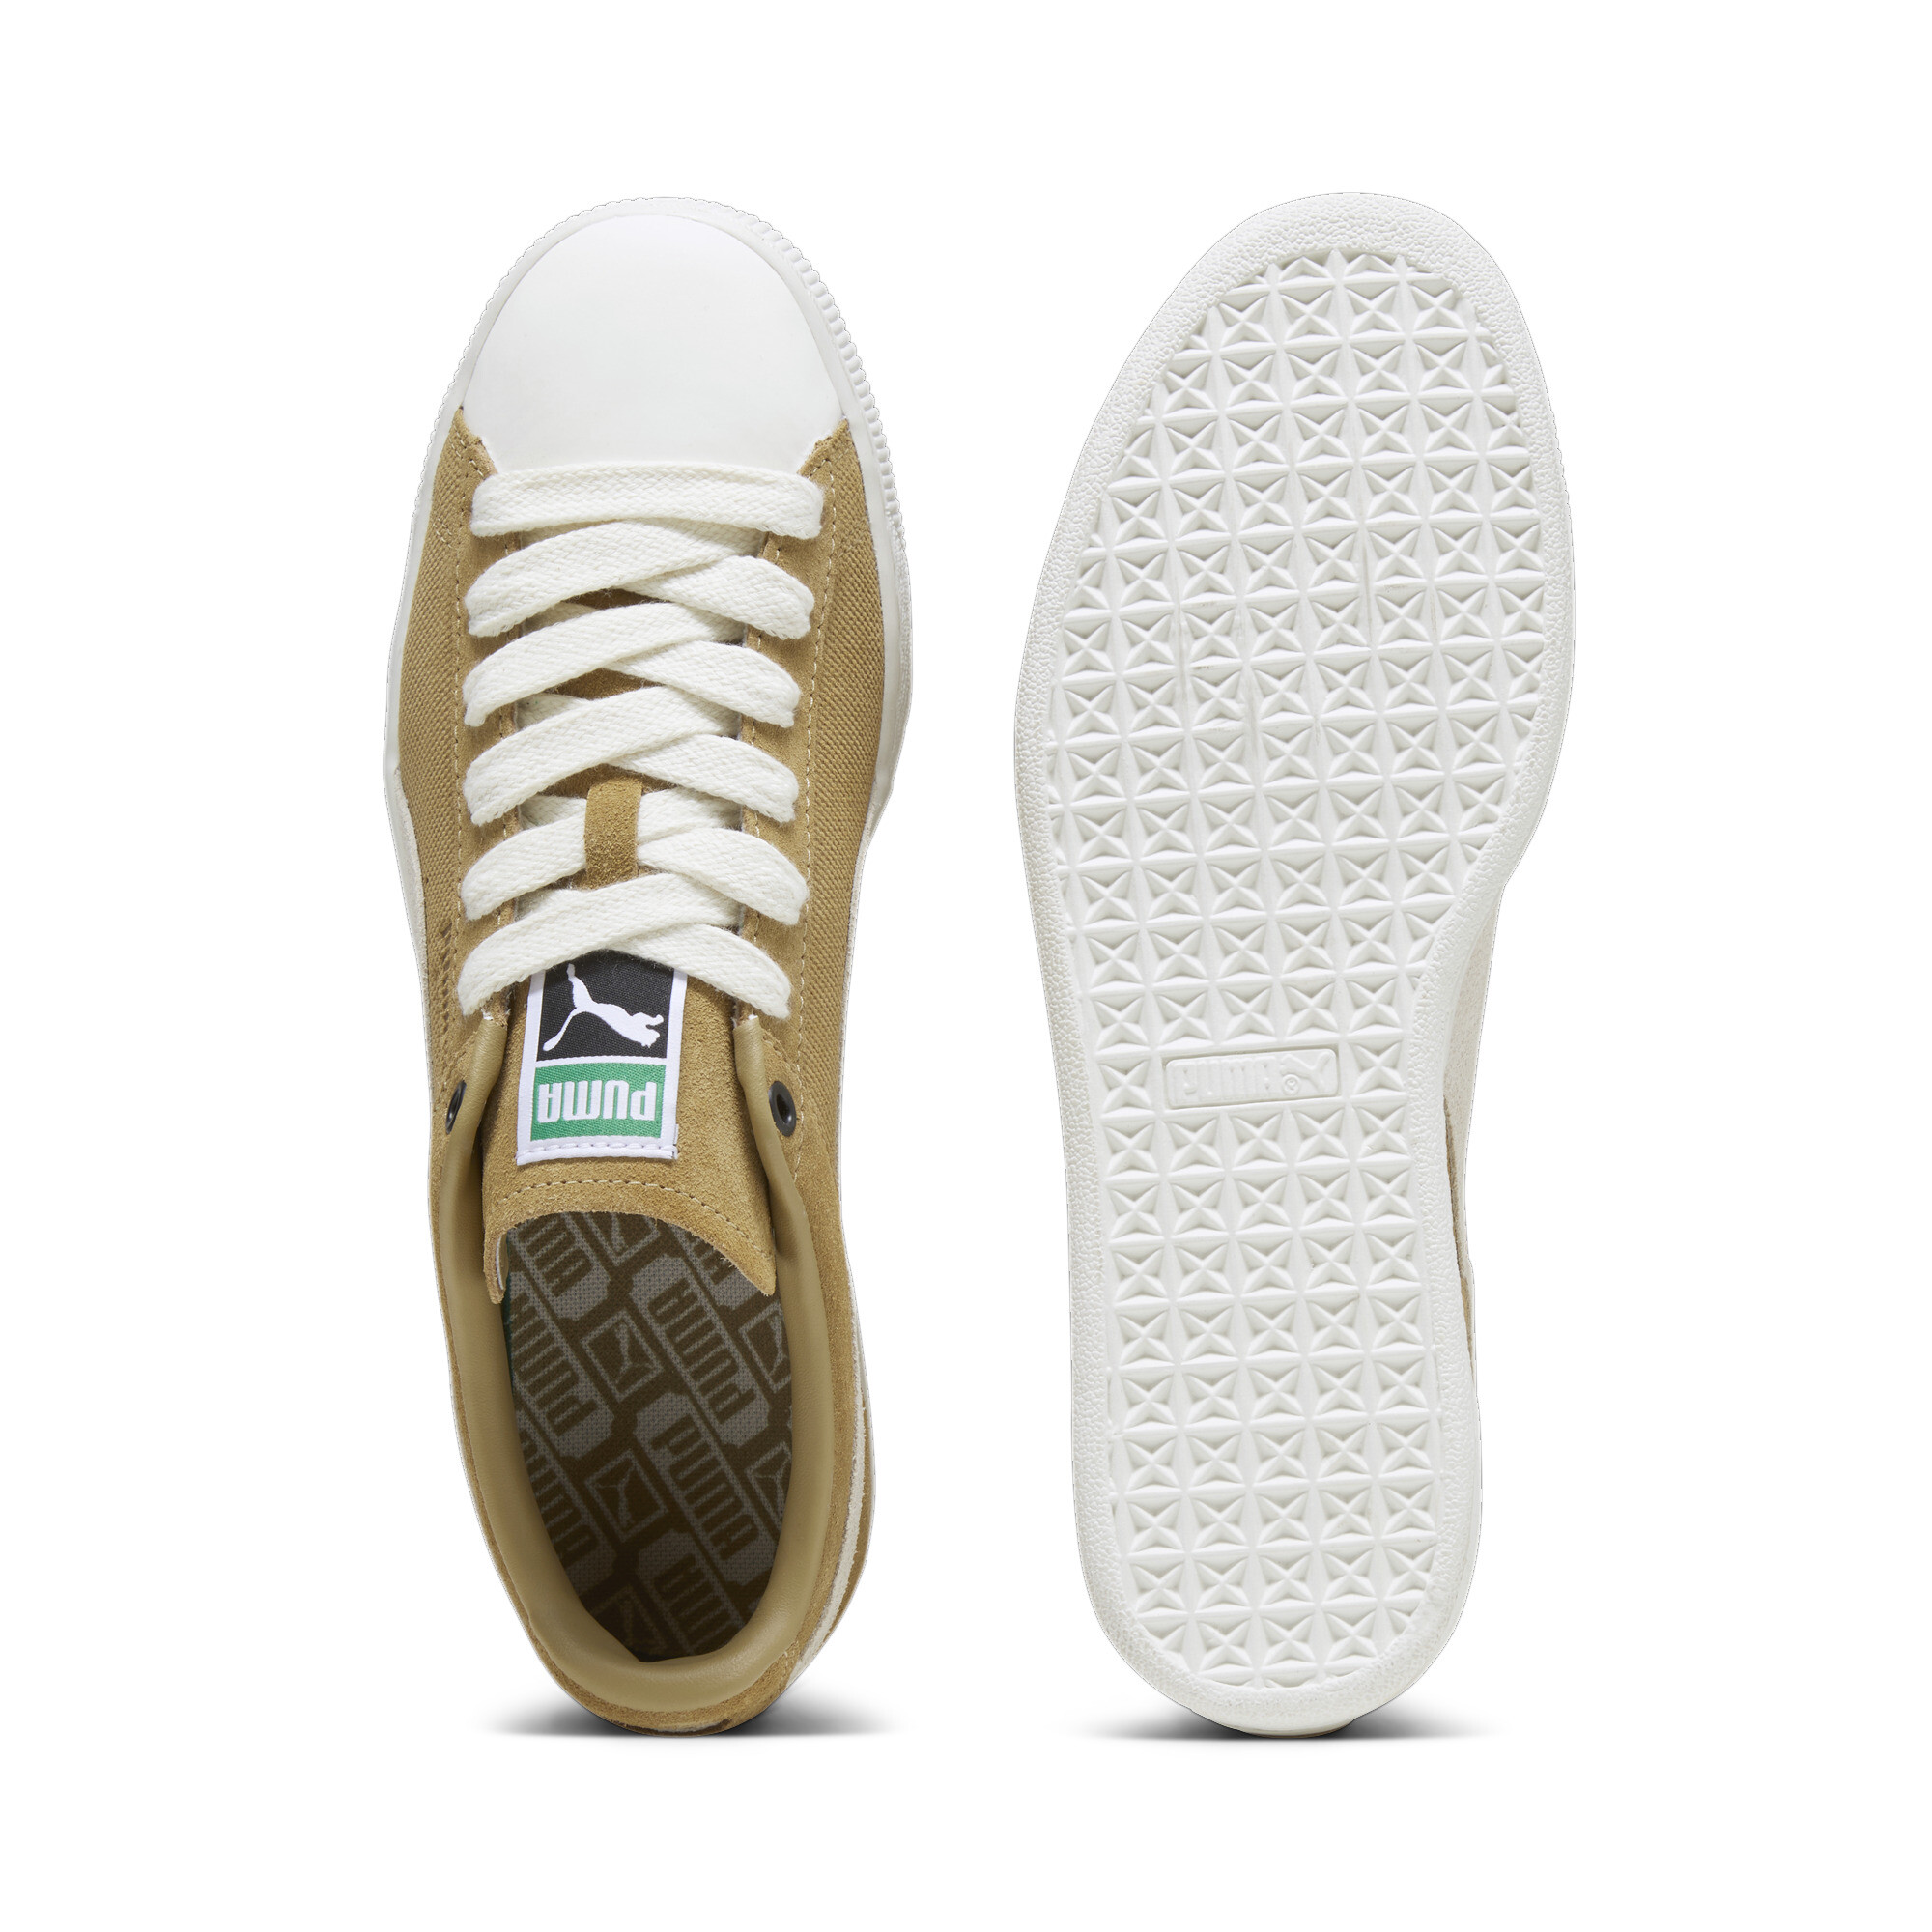 Men's PUMA Suede Hike Sneakers In Beige, Size EU 42.5